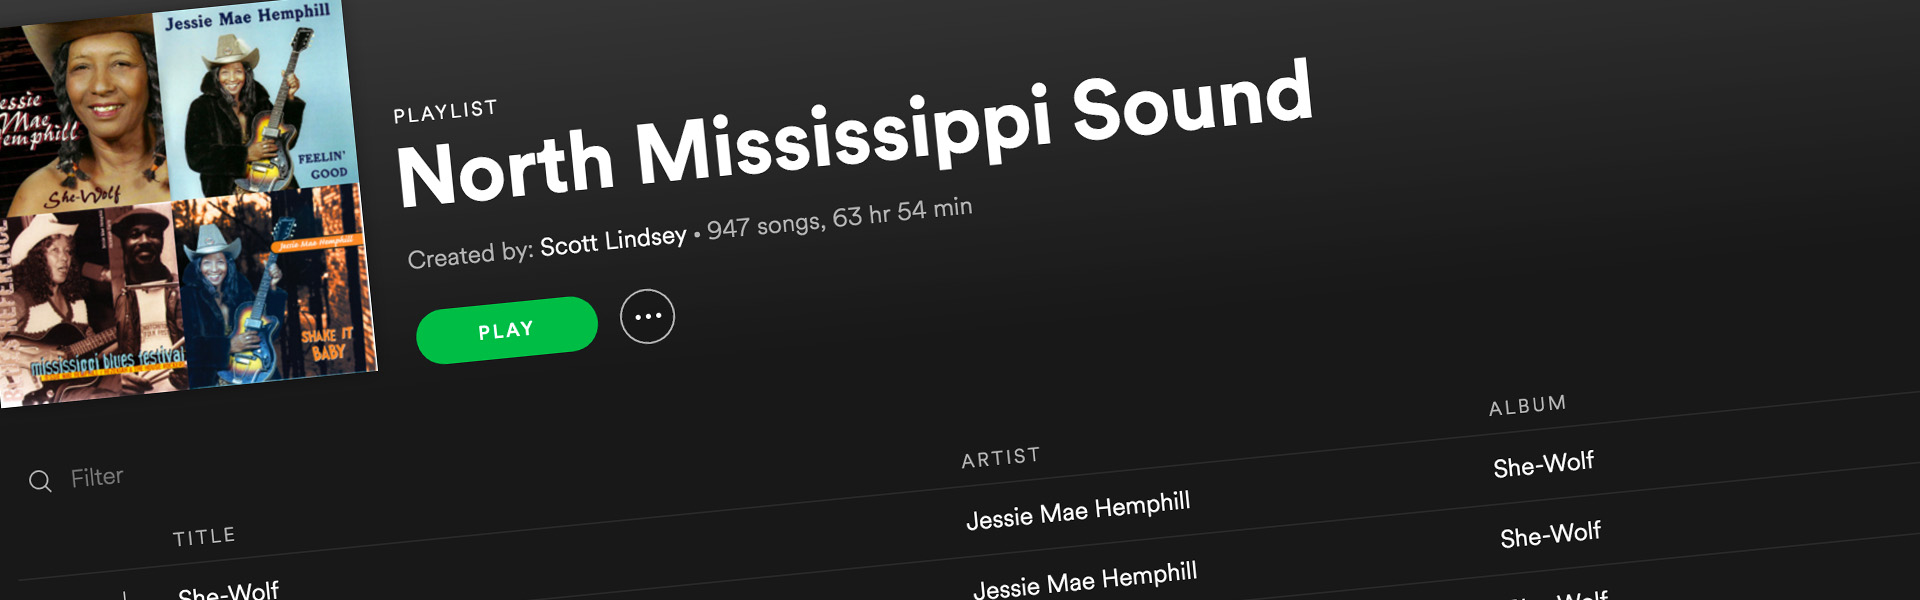 North Mississippi Sound Playlist